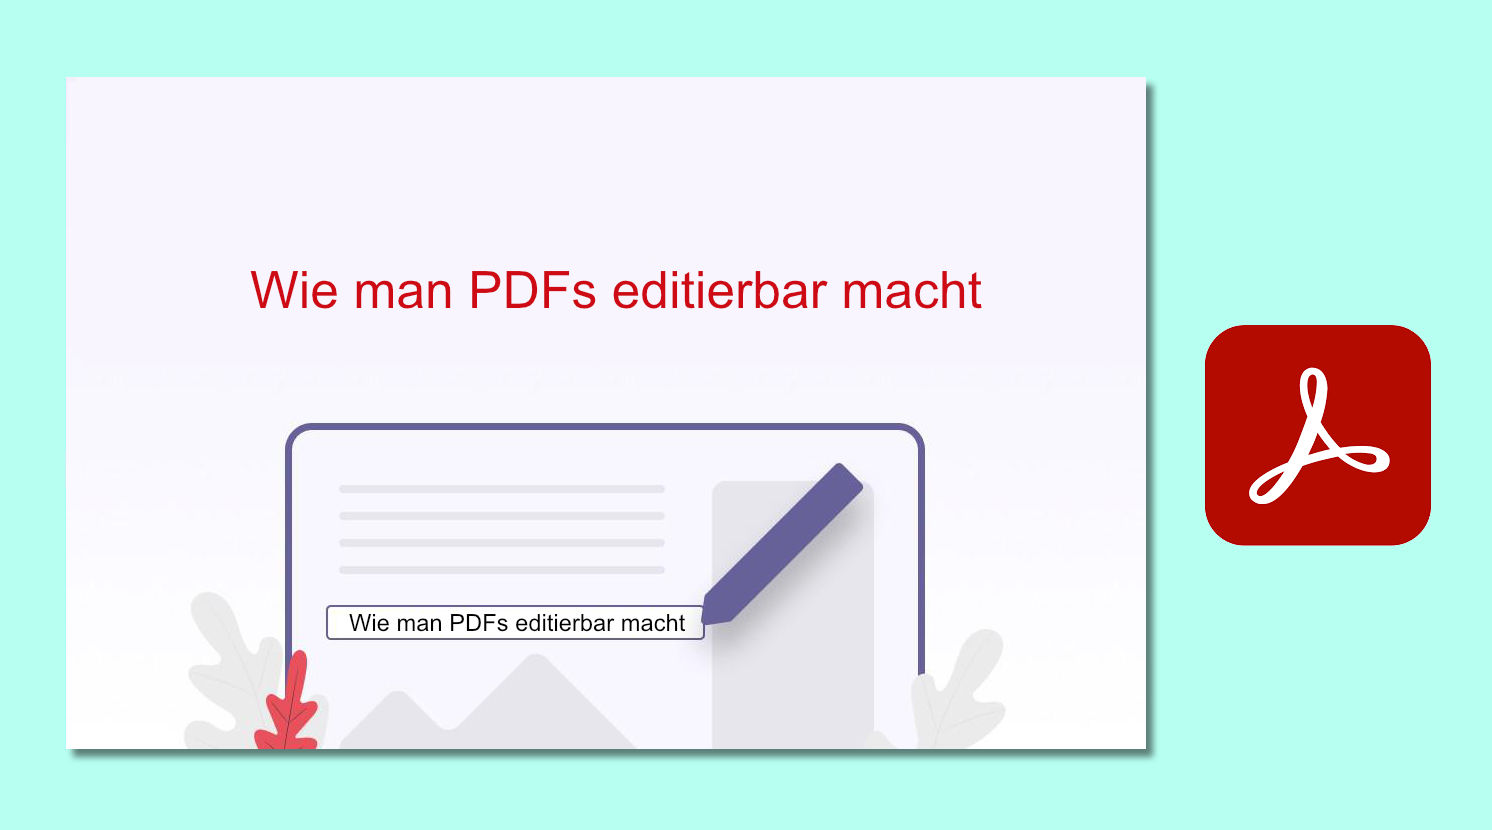 PDFs editierbar machen